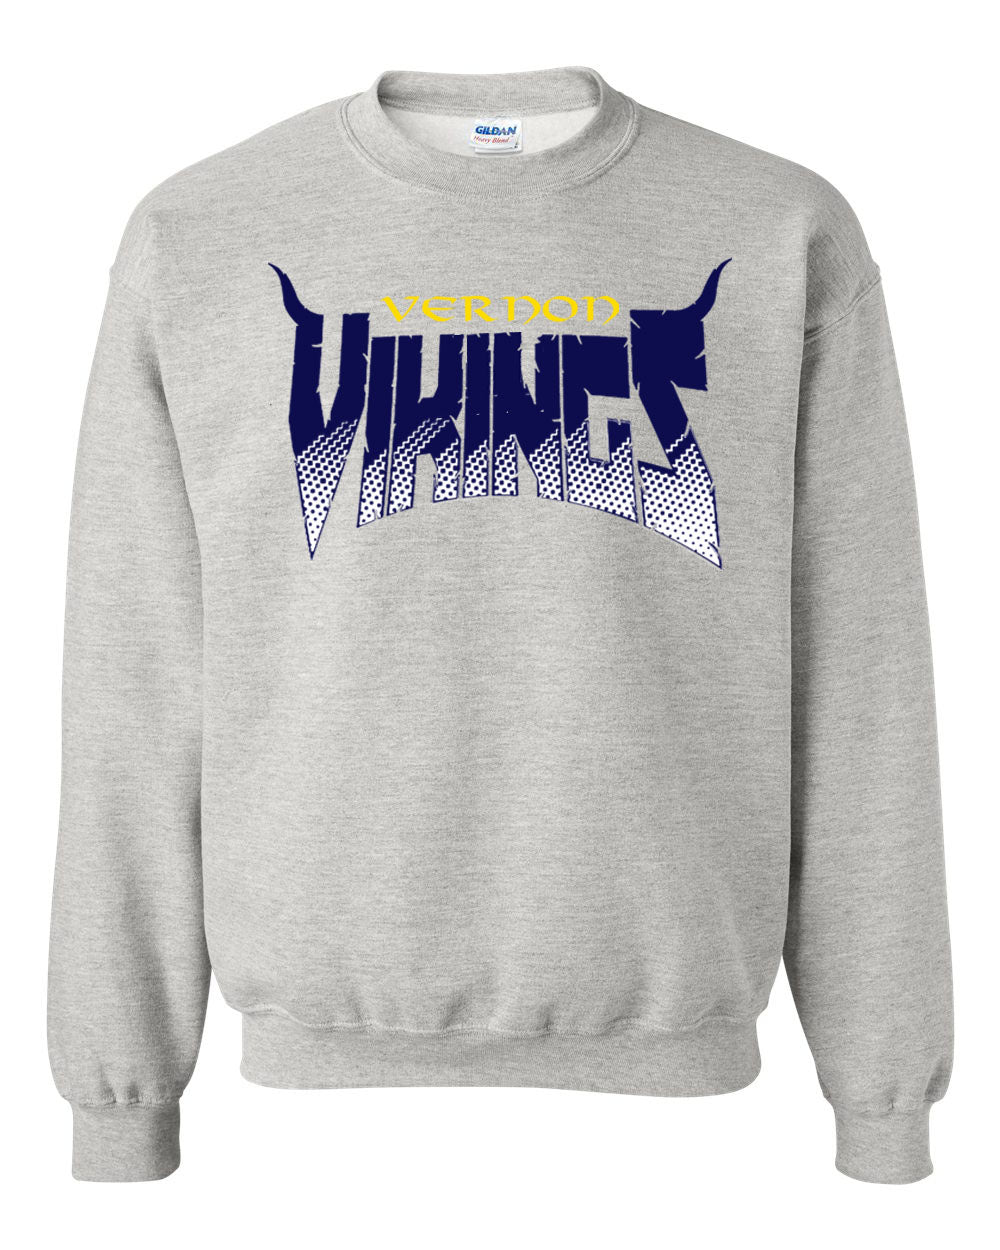 VTHS Design 15 non hooded sweatshirt